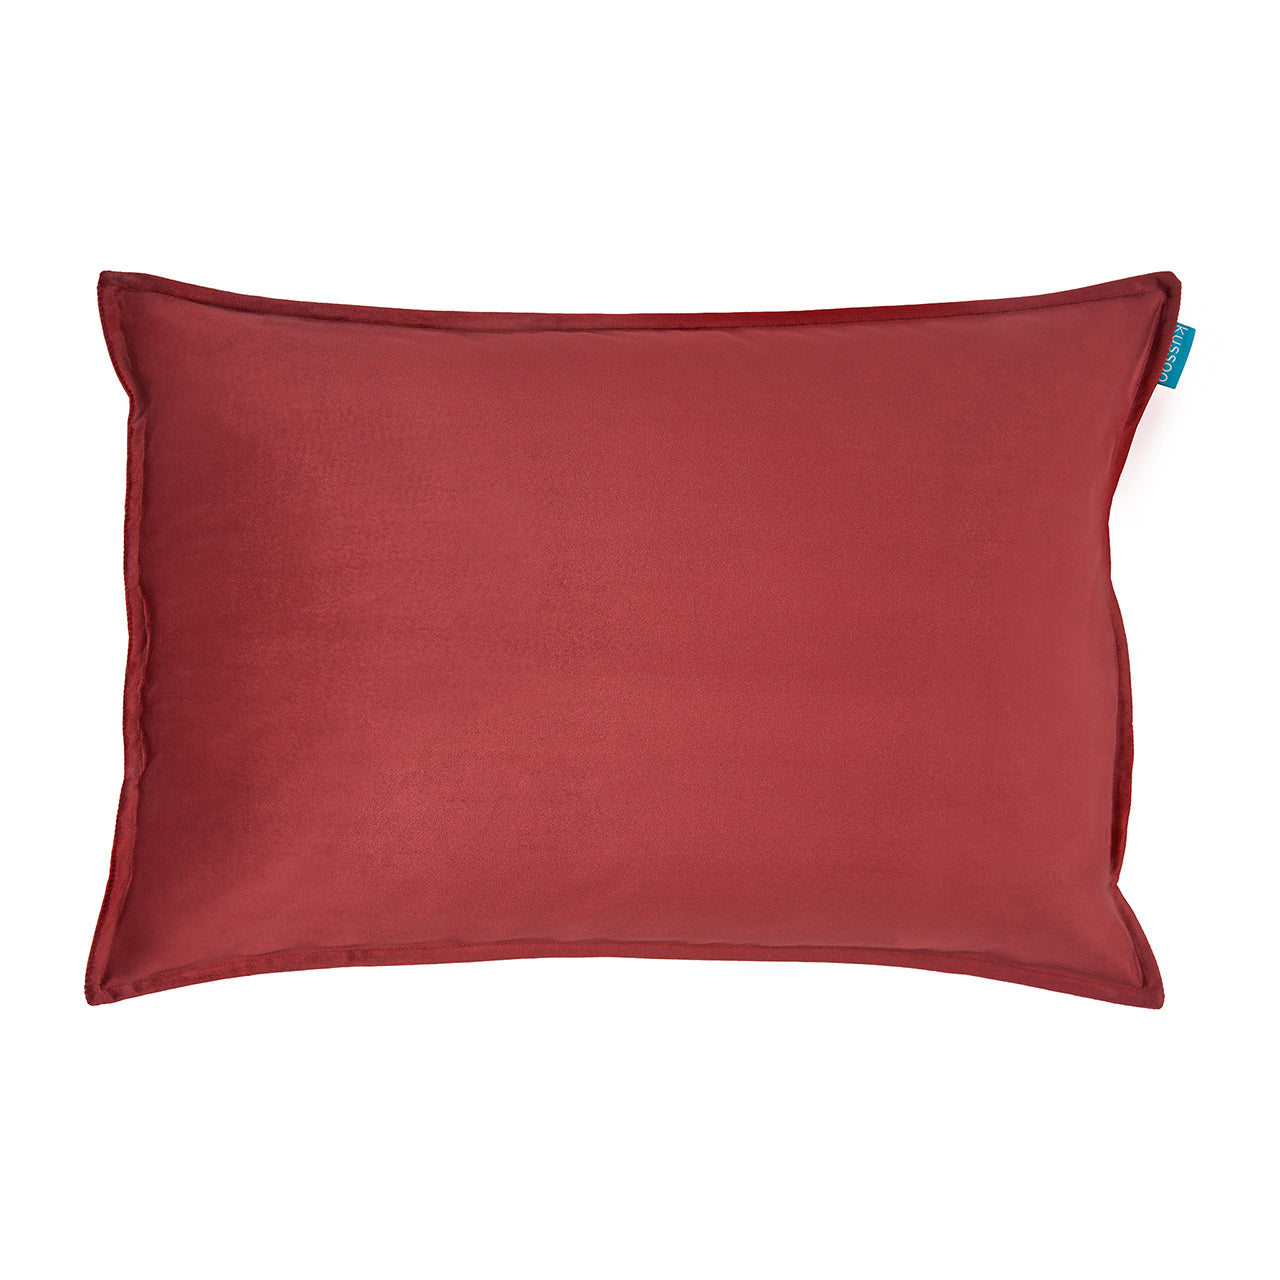 Kussen-fluweel-bordeaux-rood-40x60-cm